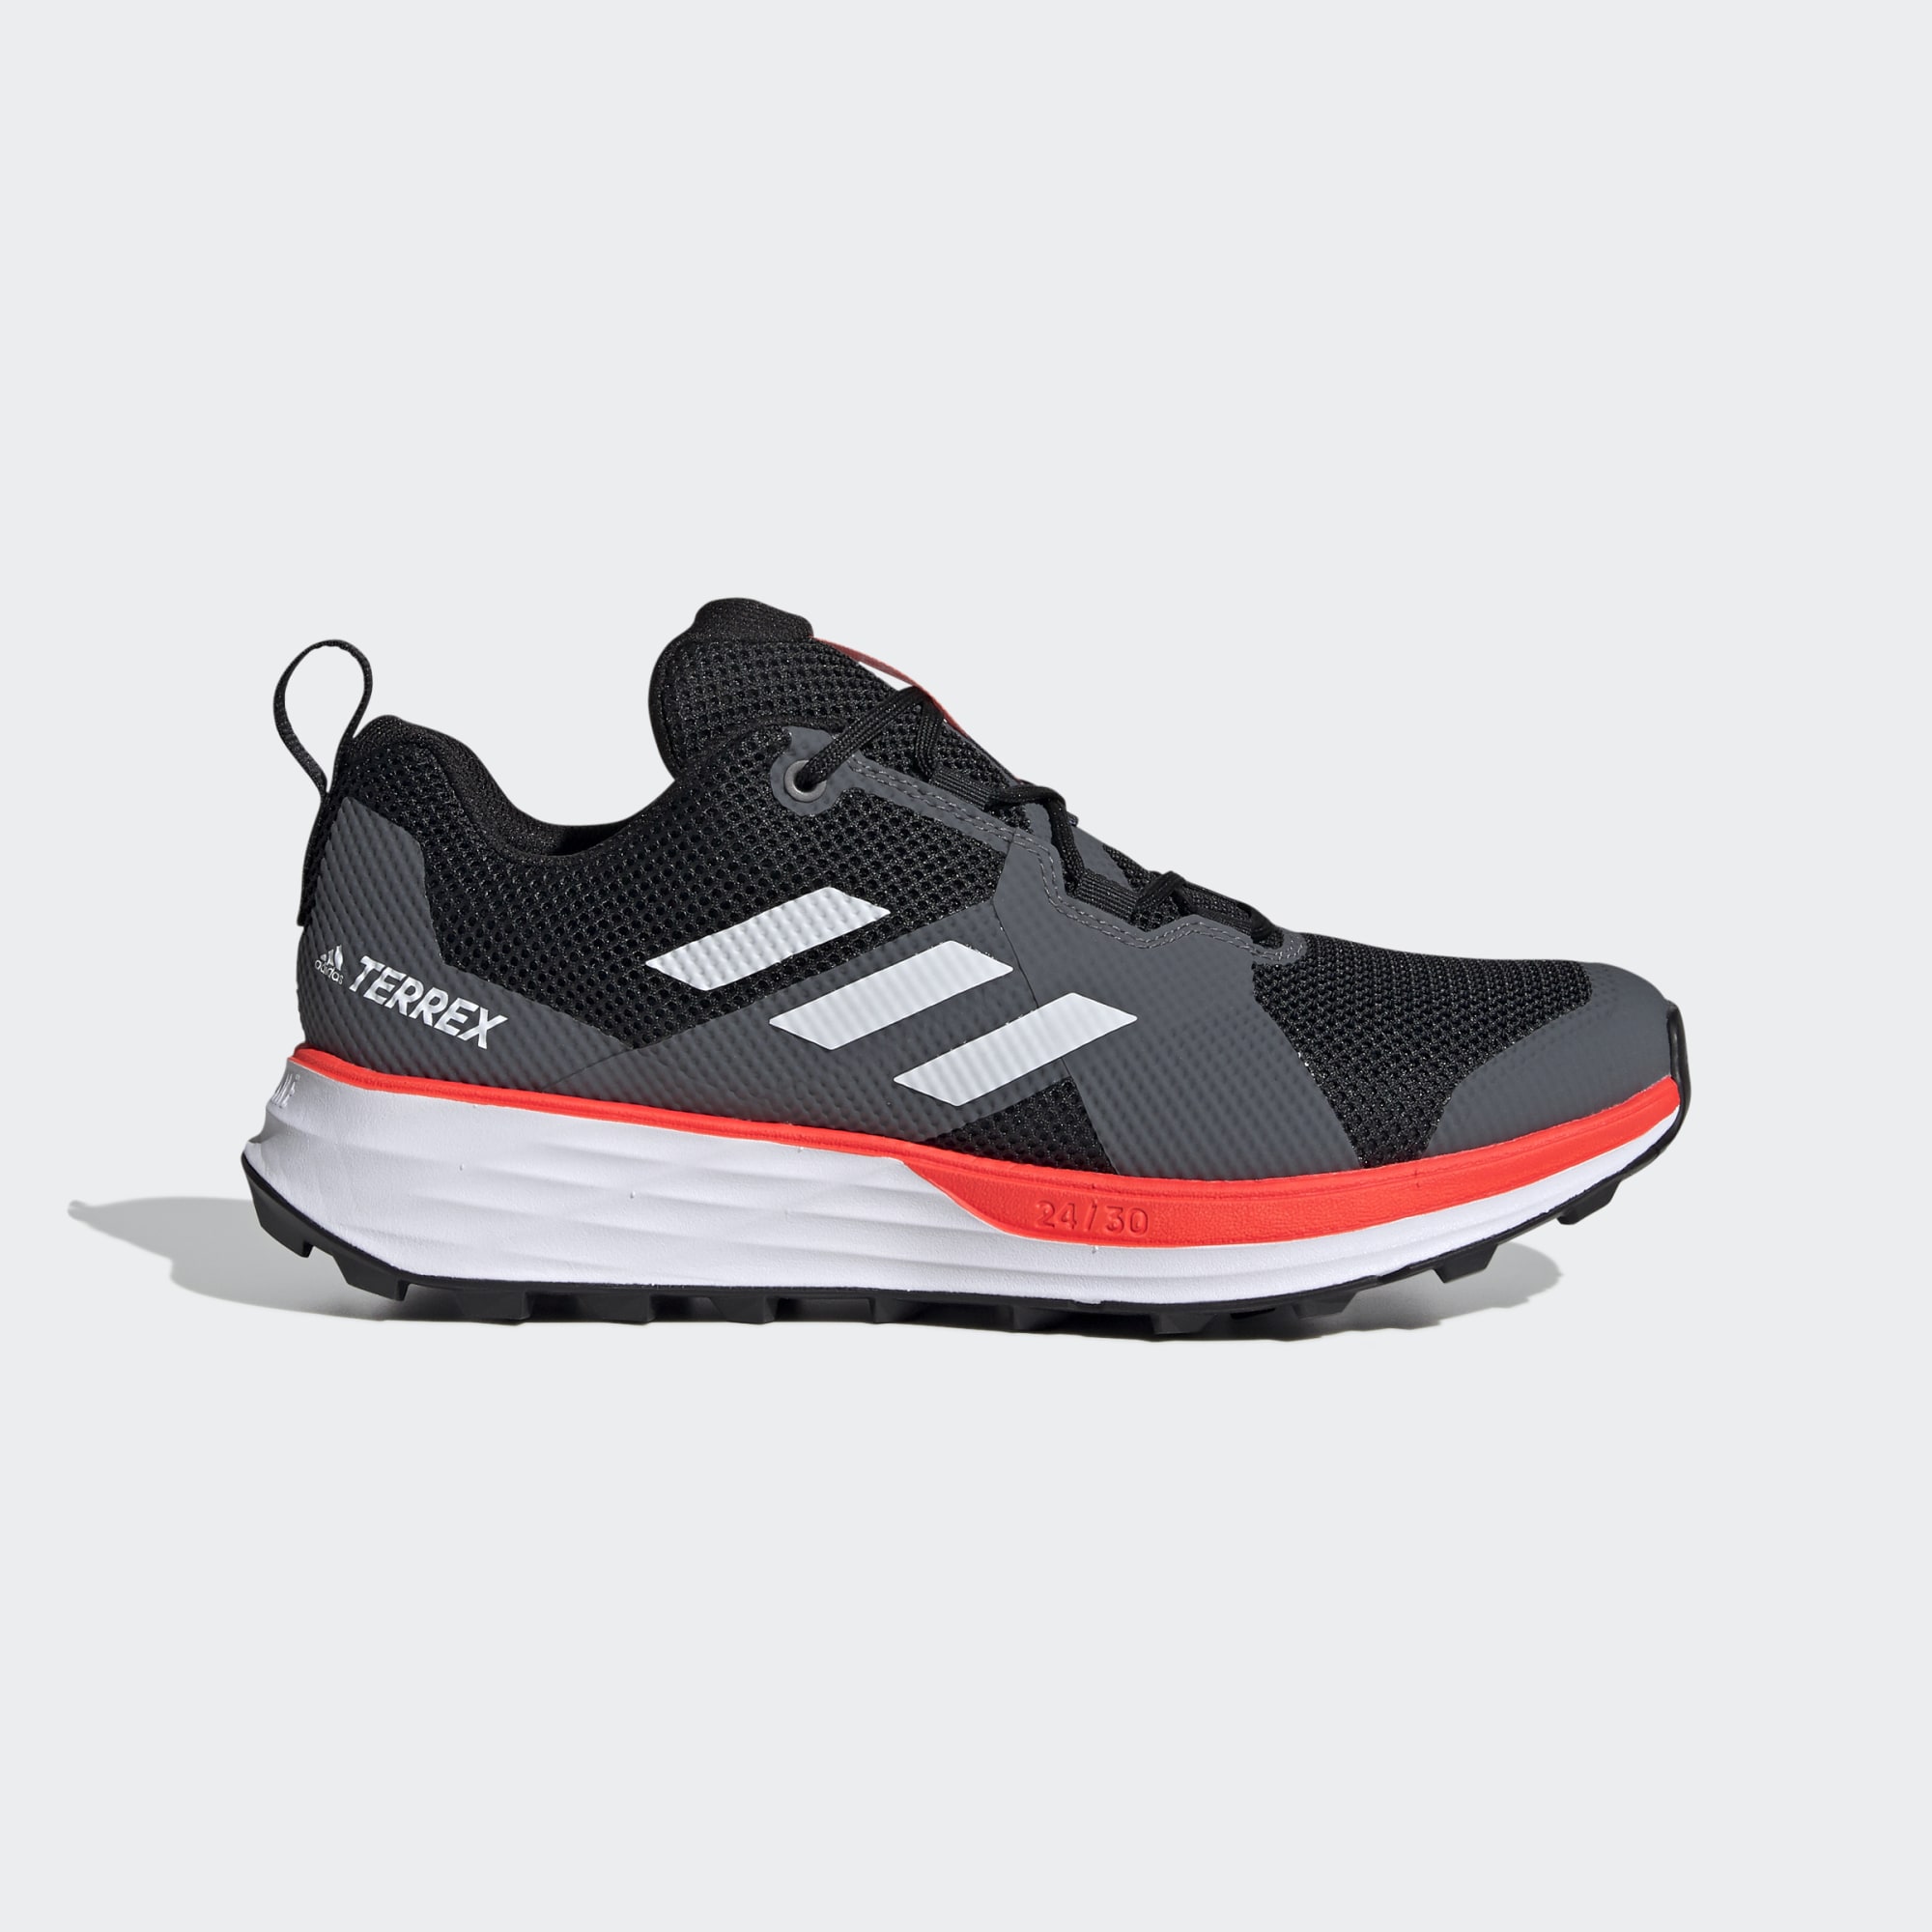 Blister Brand Guide: Adidas Terrex Trail Running Shoe Lineup, 2020 ...